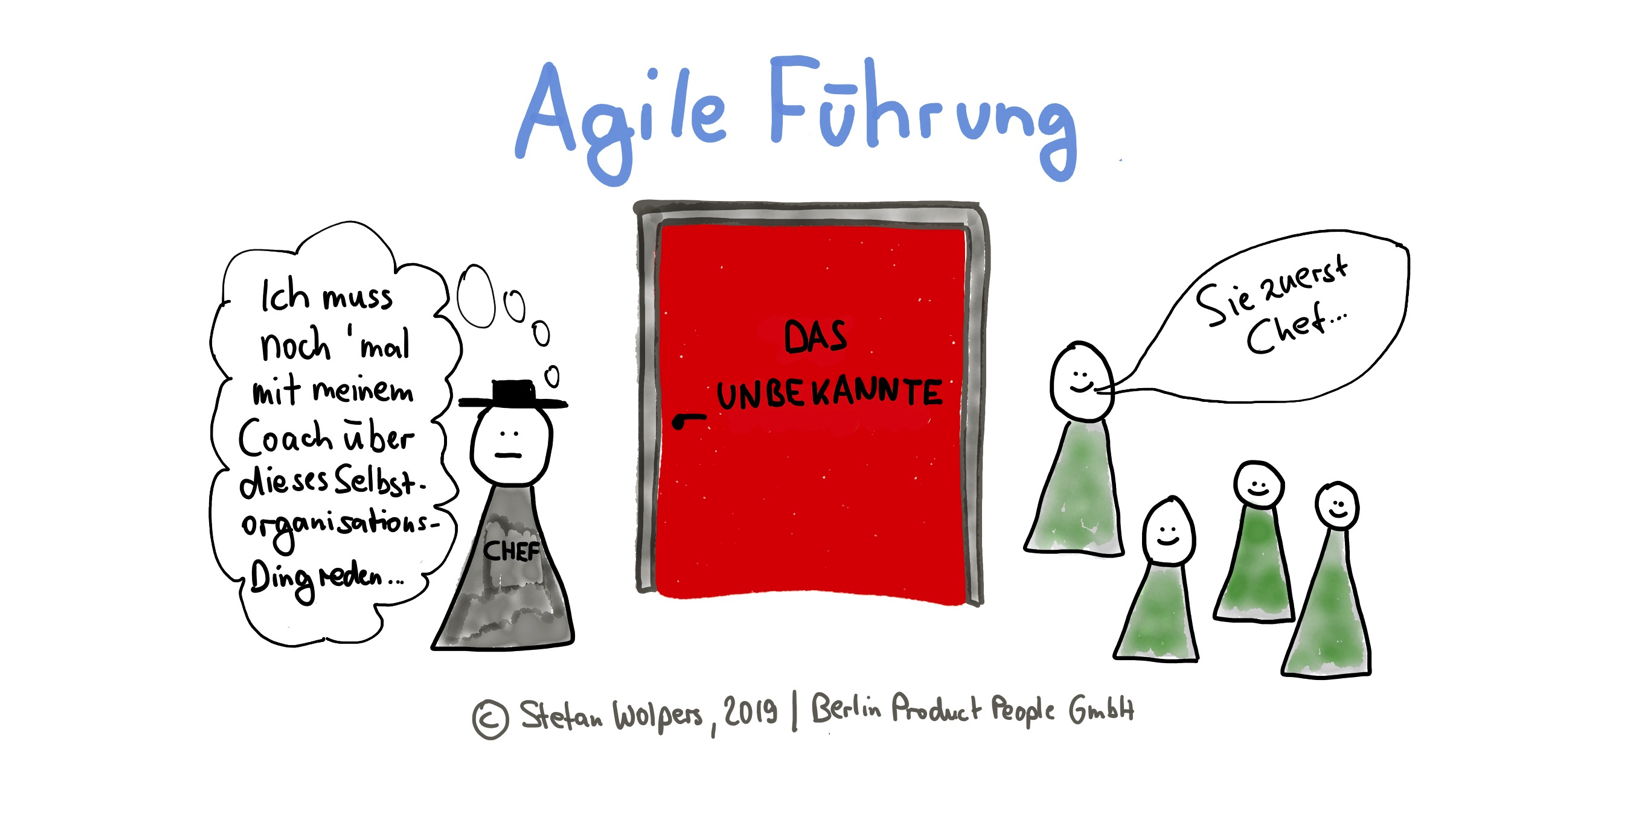 Agile Führung – Berlin Product People GmbH